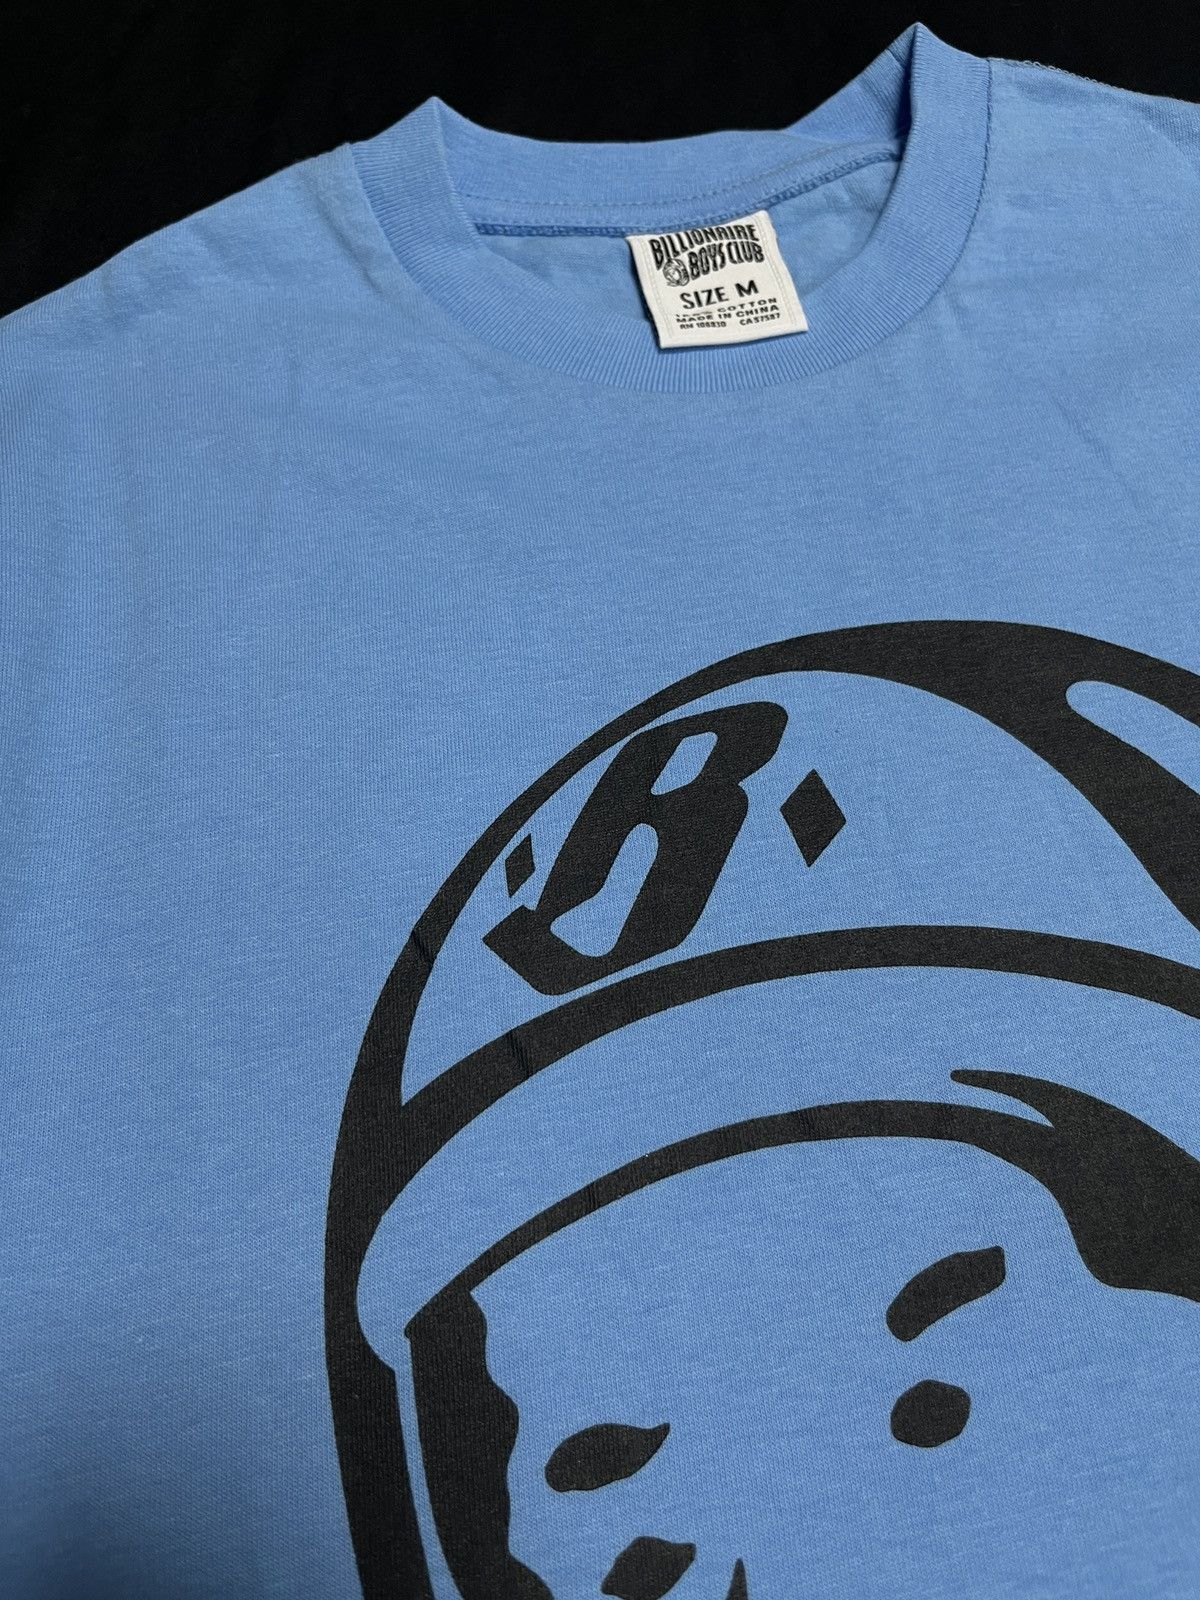 Rare Billionaire Boys Club BBC Helmet Print T-Shirt Blue Medium - 5